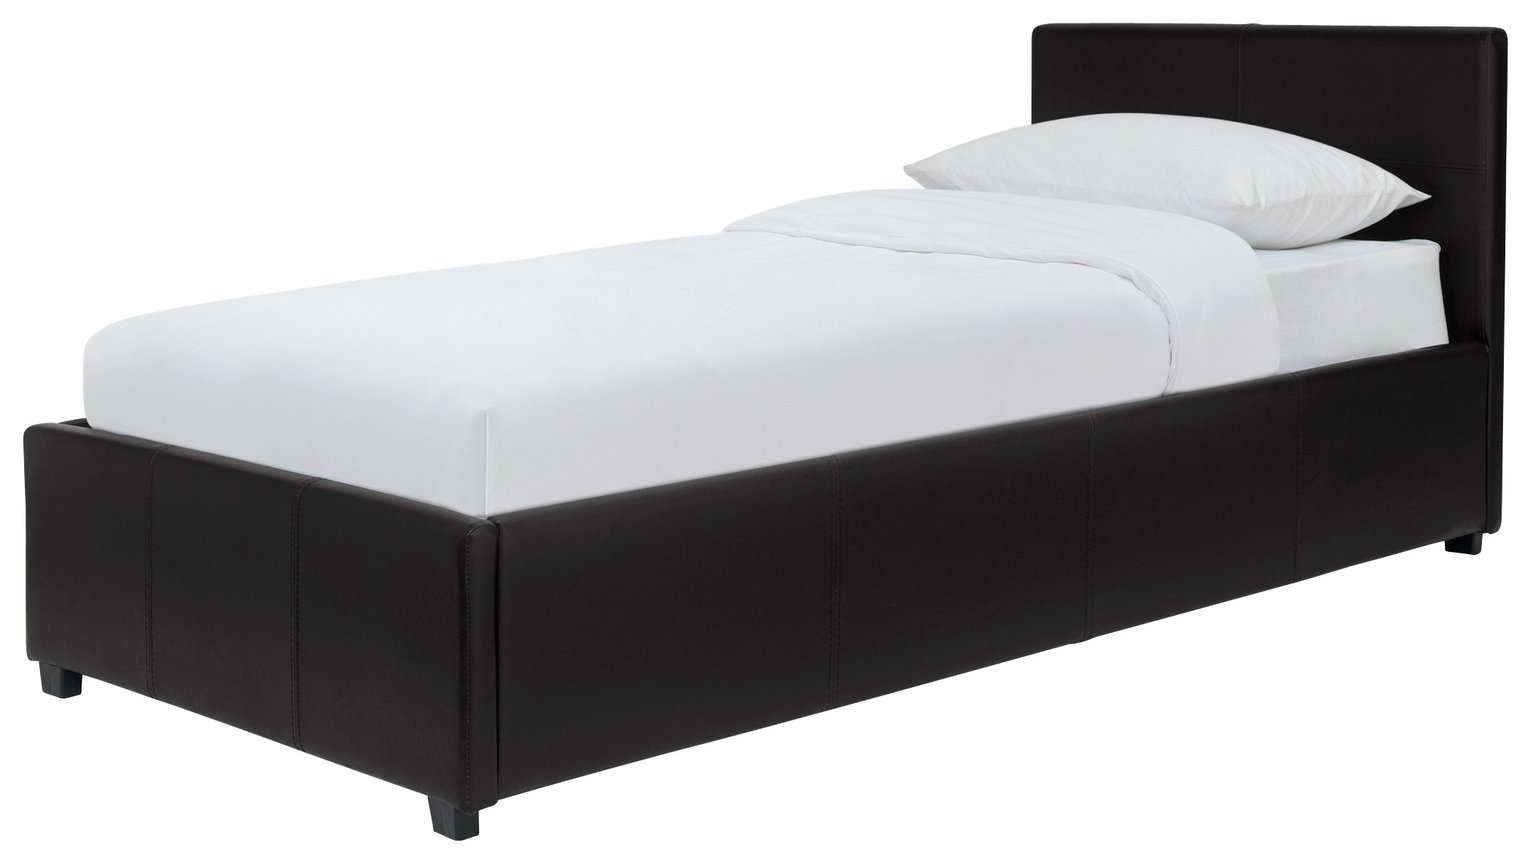 Argos Home Lavendon Ottoman Single Faux Leather Bed Frame- Black at Argos review